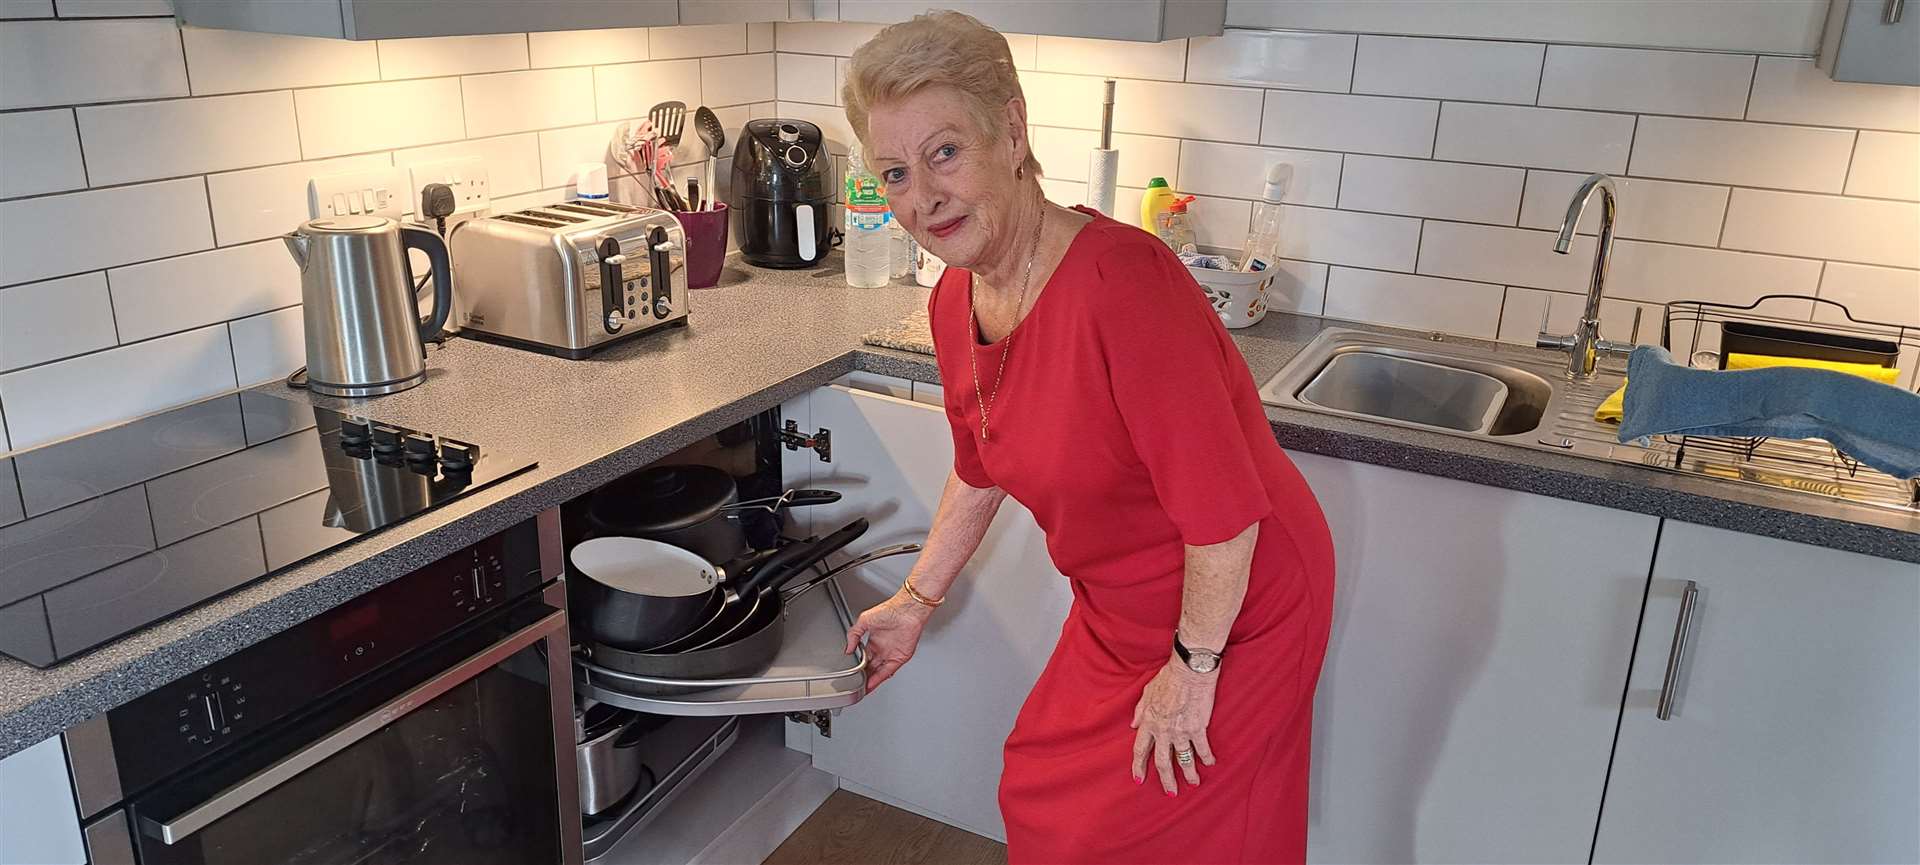 Veronica Eldridge showing off her state-of-the-art kitchen